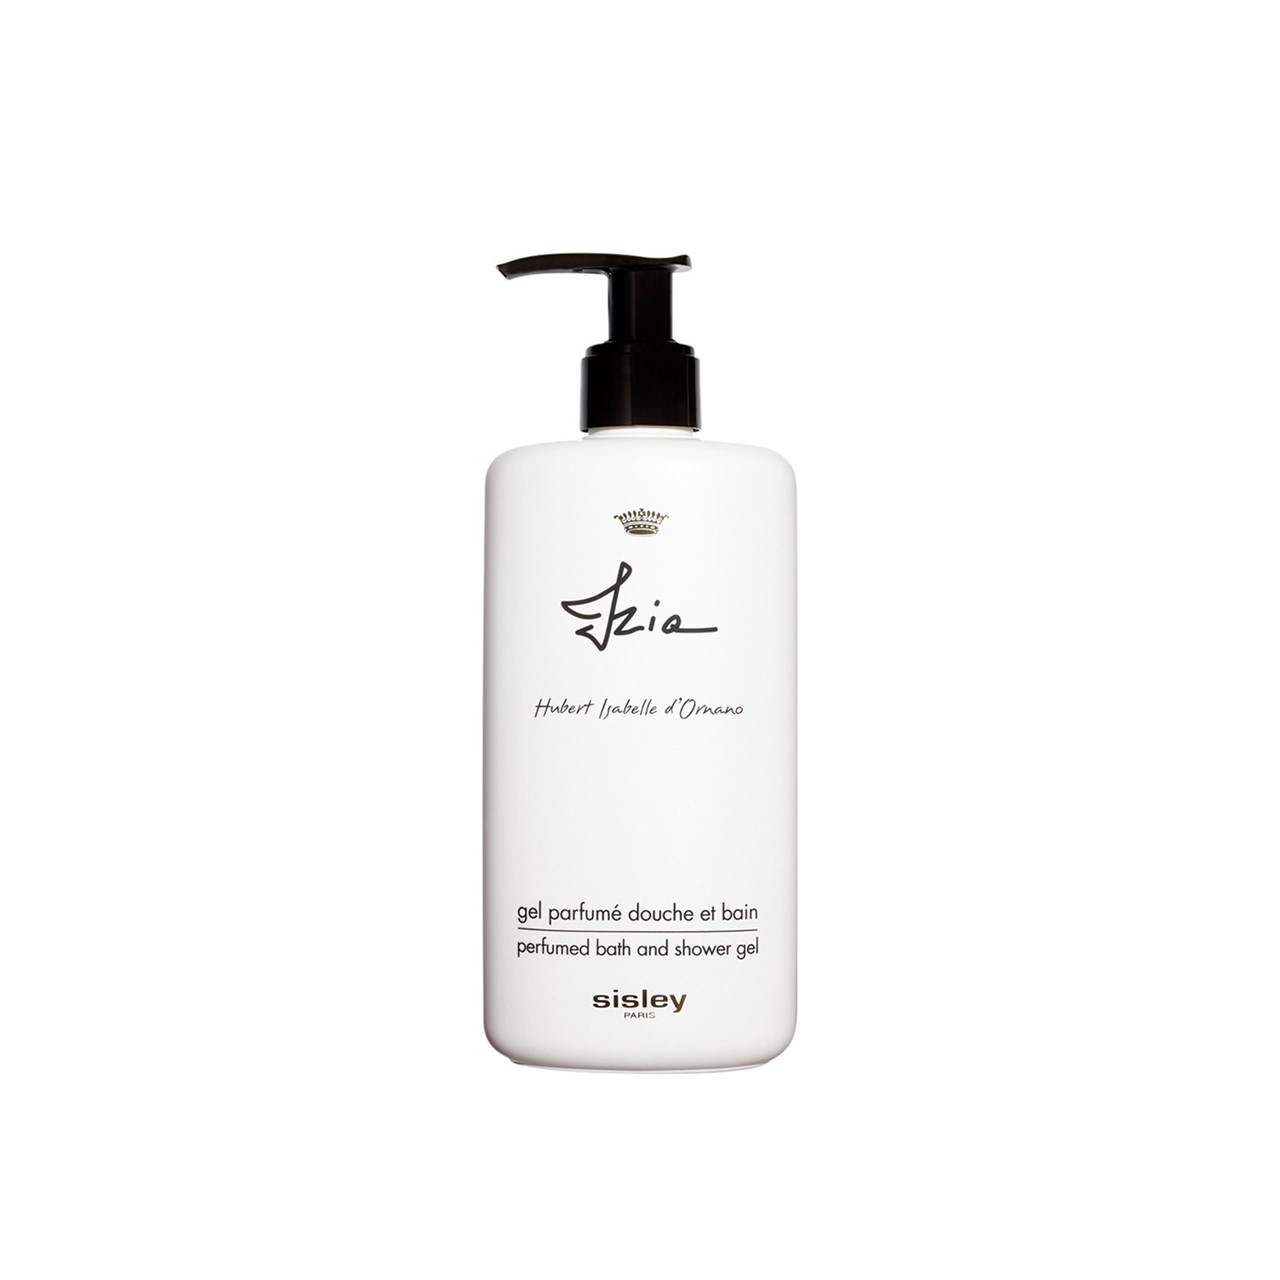 Sisley Paris Izia Perfumed Bath and Shower Gel 250ml (8.4 fl oz)